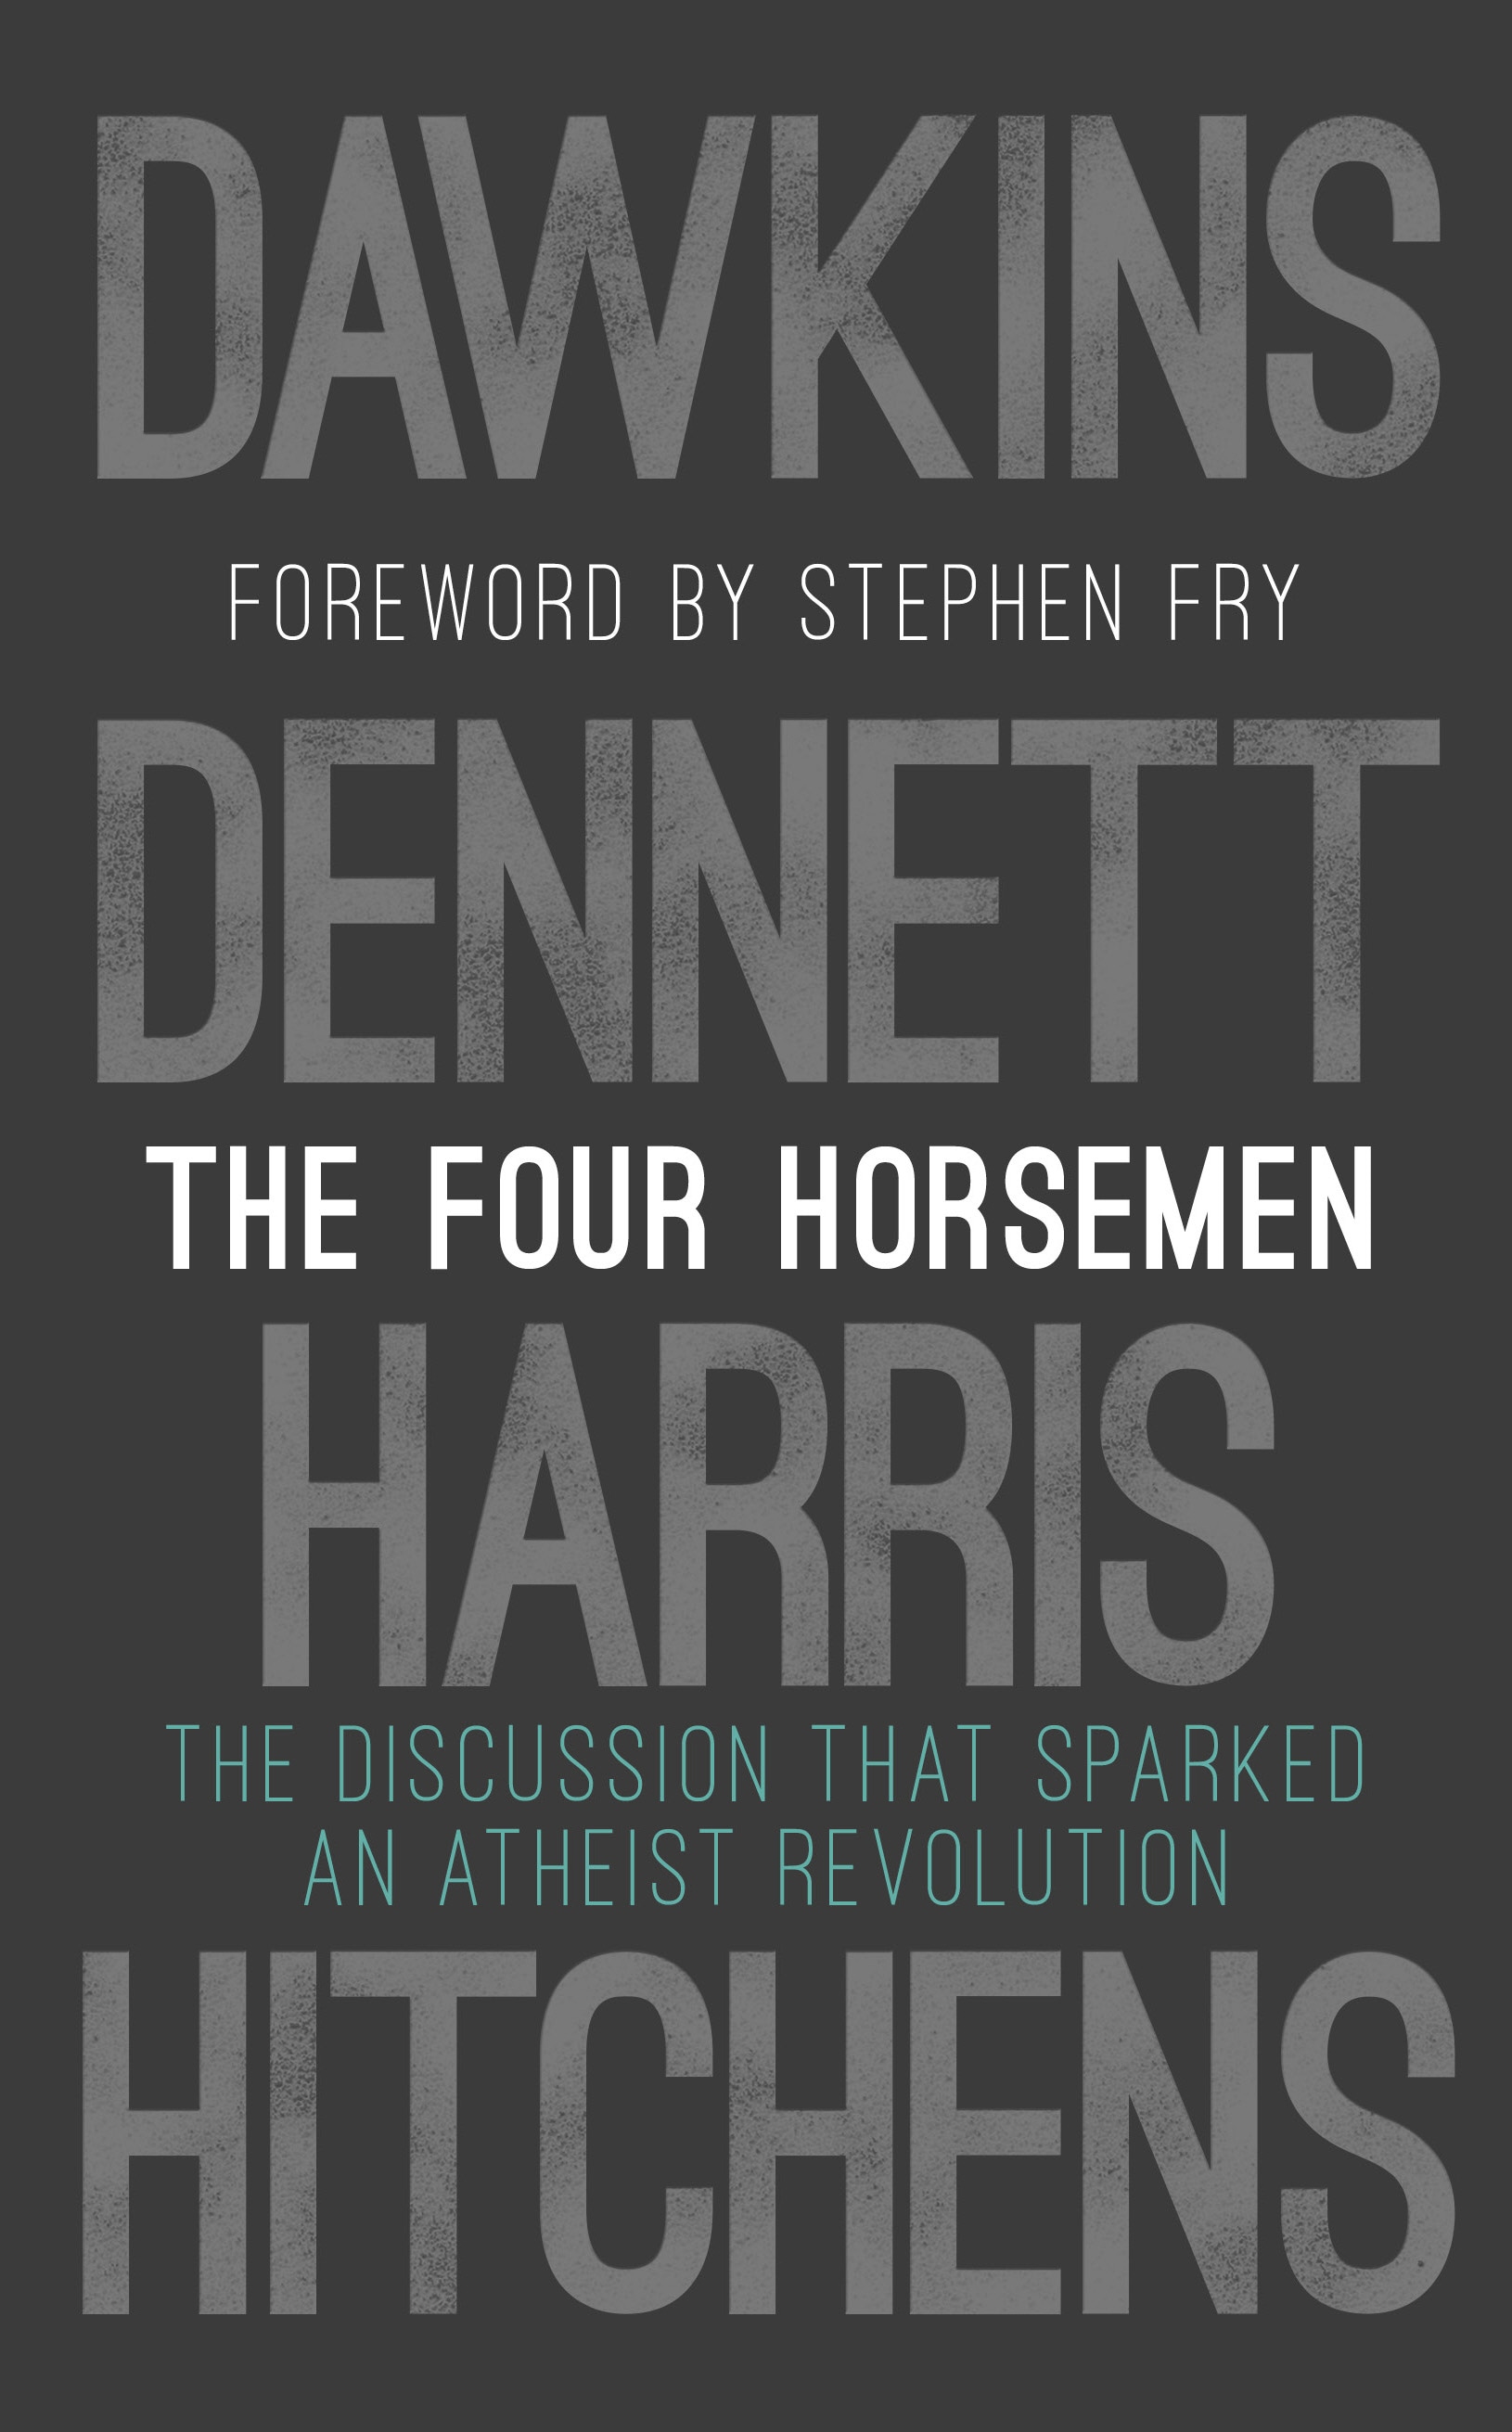 Book “The Four Horsemen” by Richard Dawkins — February 14, 2019